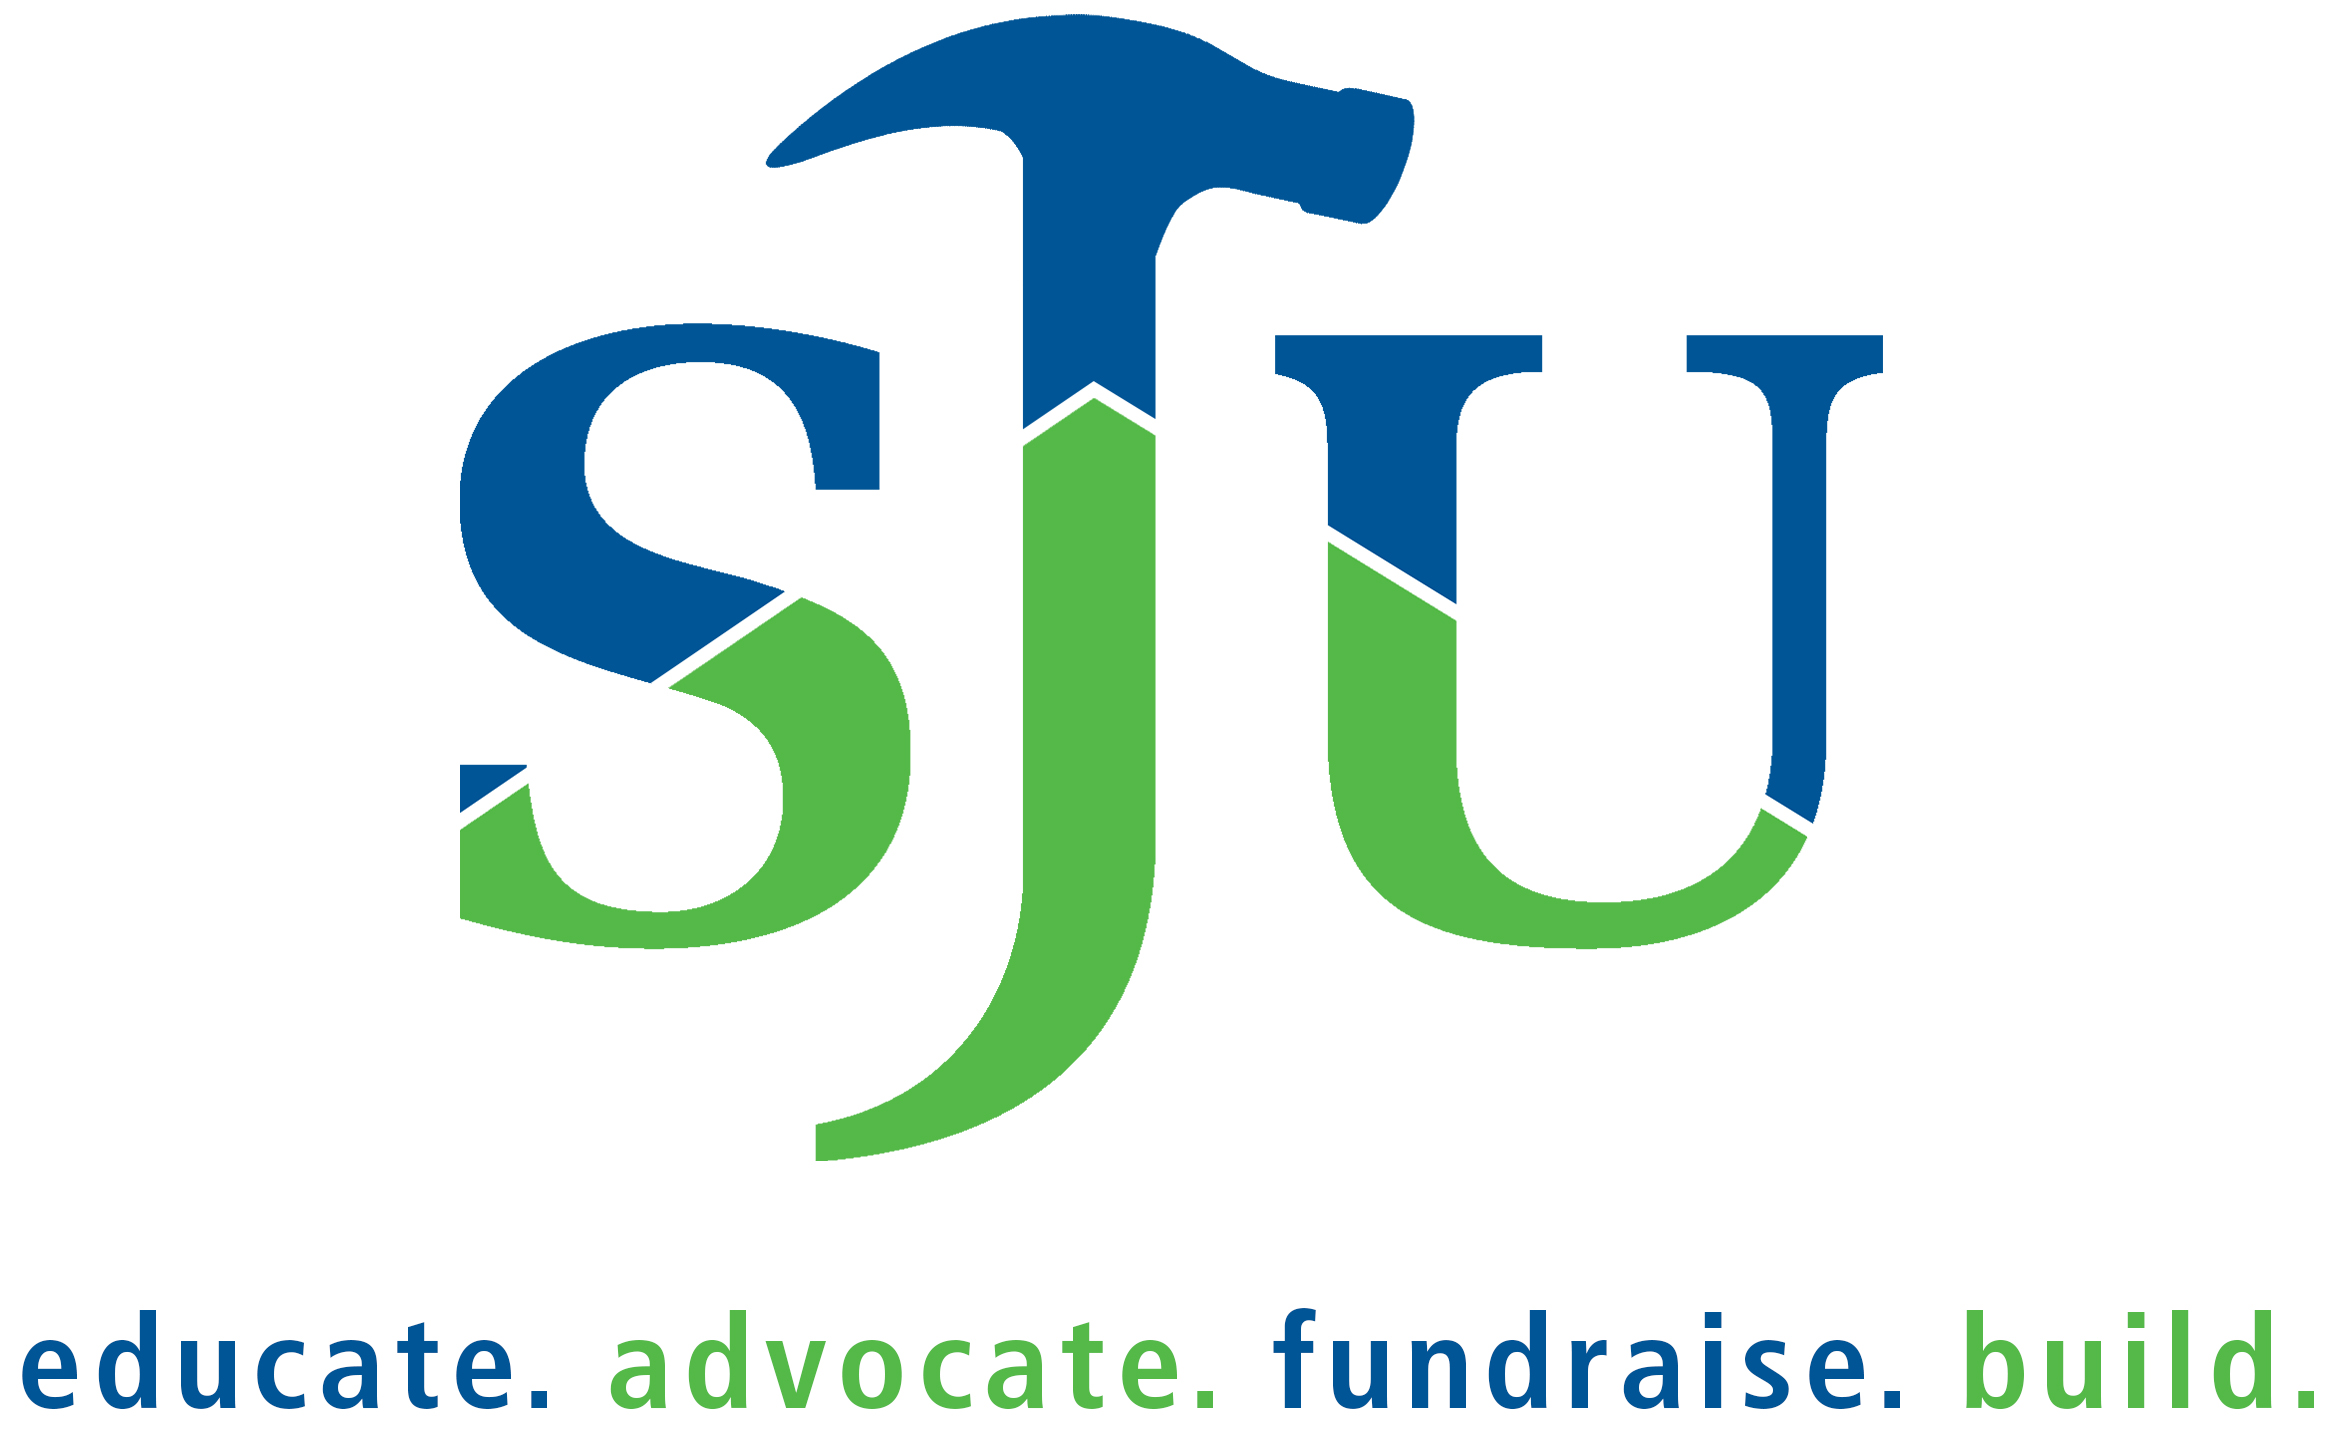 SJU Logo